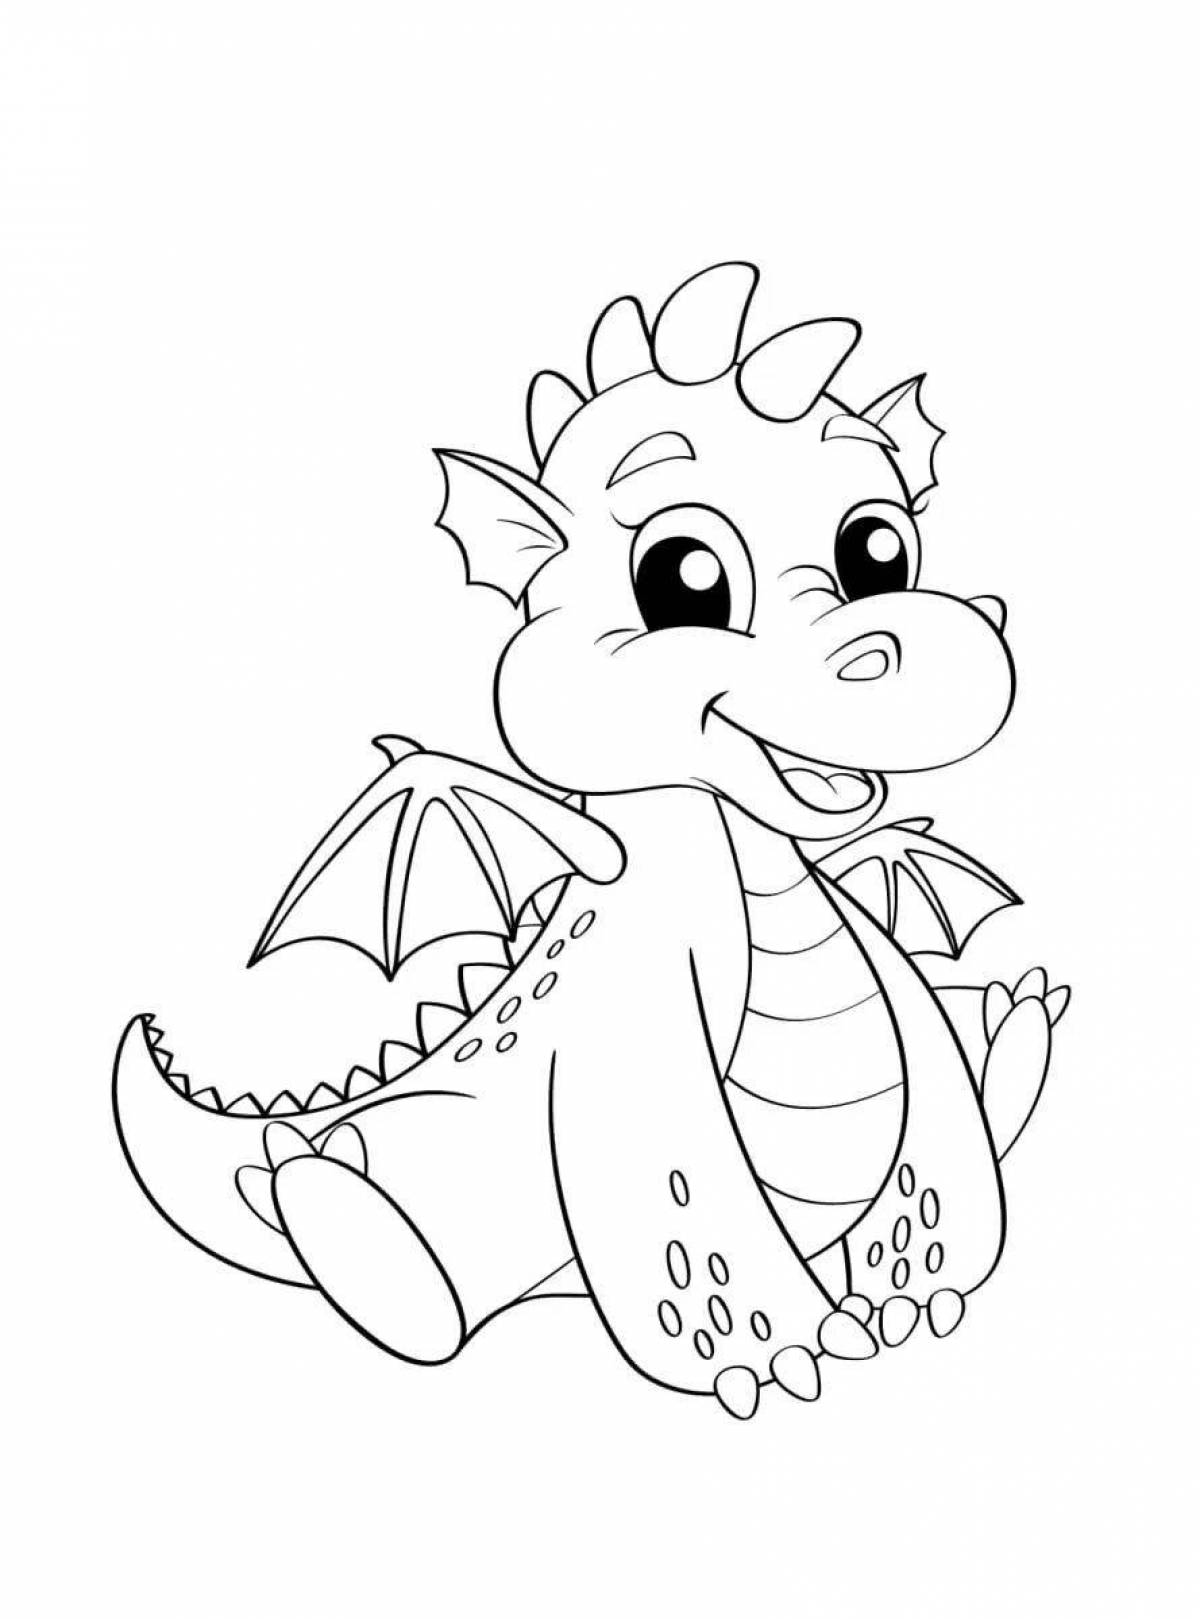 Coloring book shining cute dragon